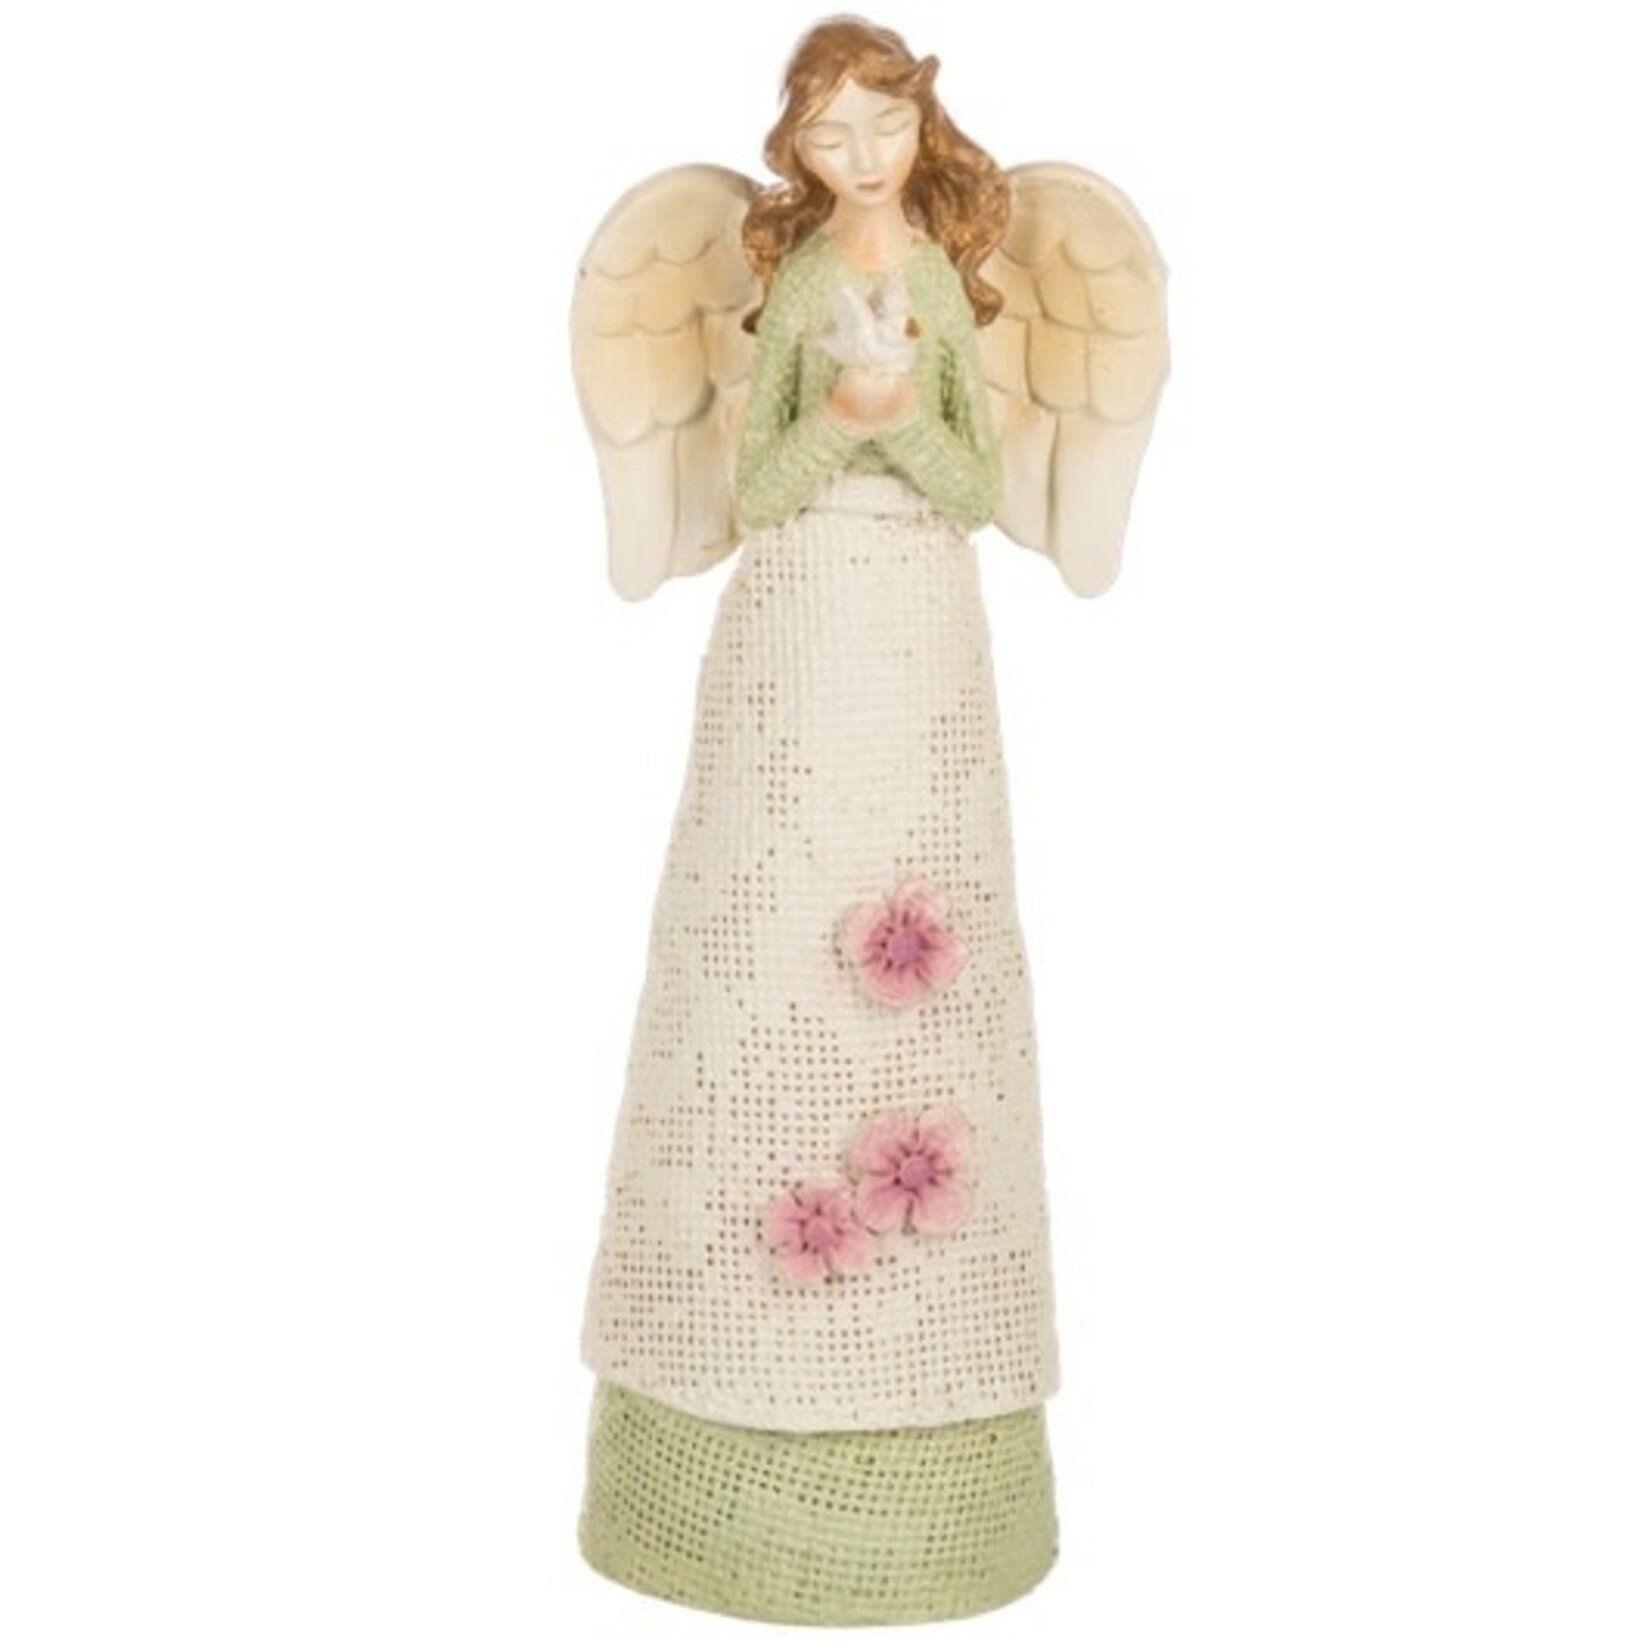 Ganz Spring Fling - Angel Figurines